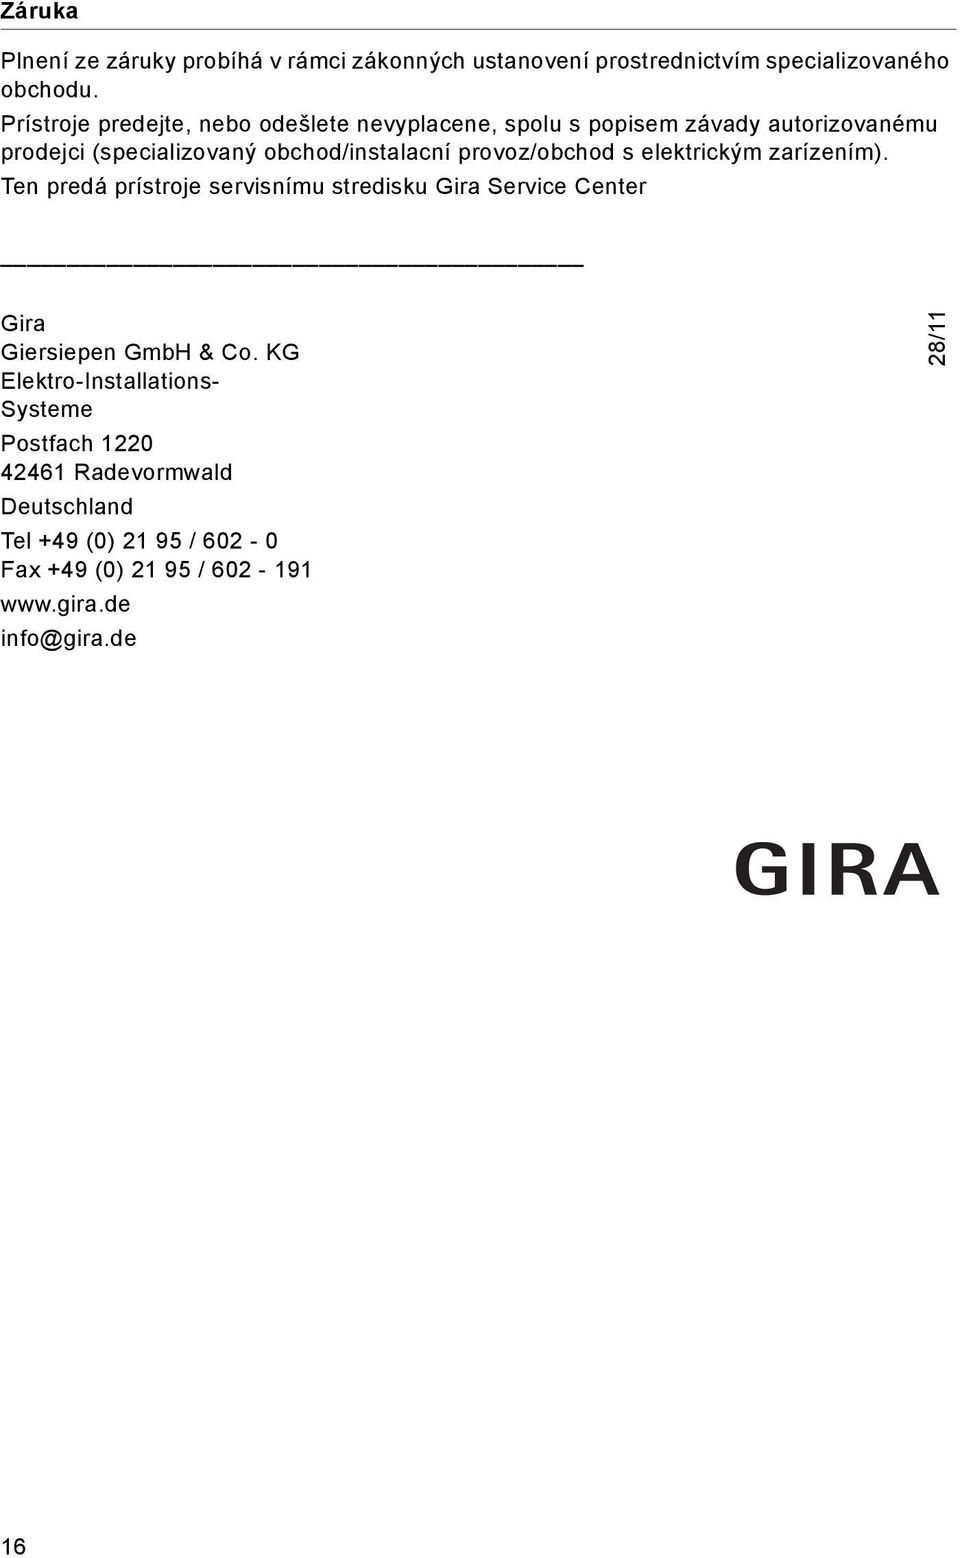 provoz/obchod s elektrickým zarízením). Ten predá prístroje servisnímu stredisku Gira Service Center Gira Giersiepen GmbH & Co.